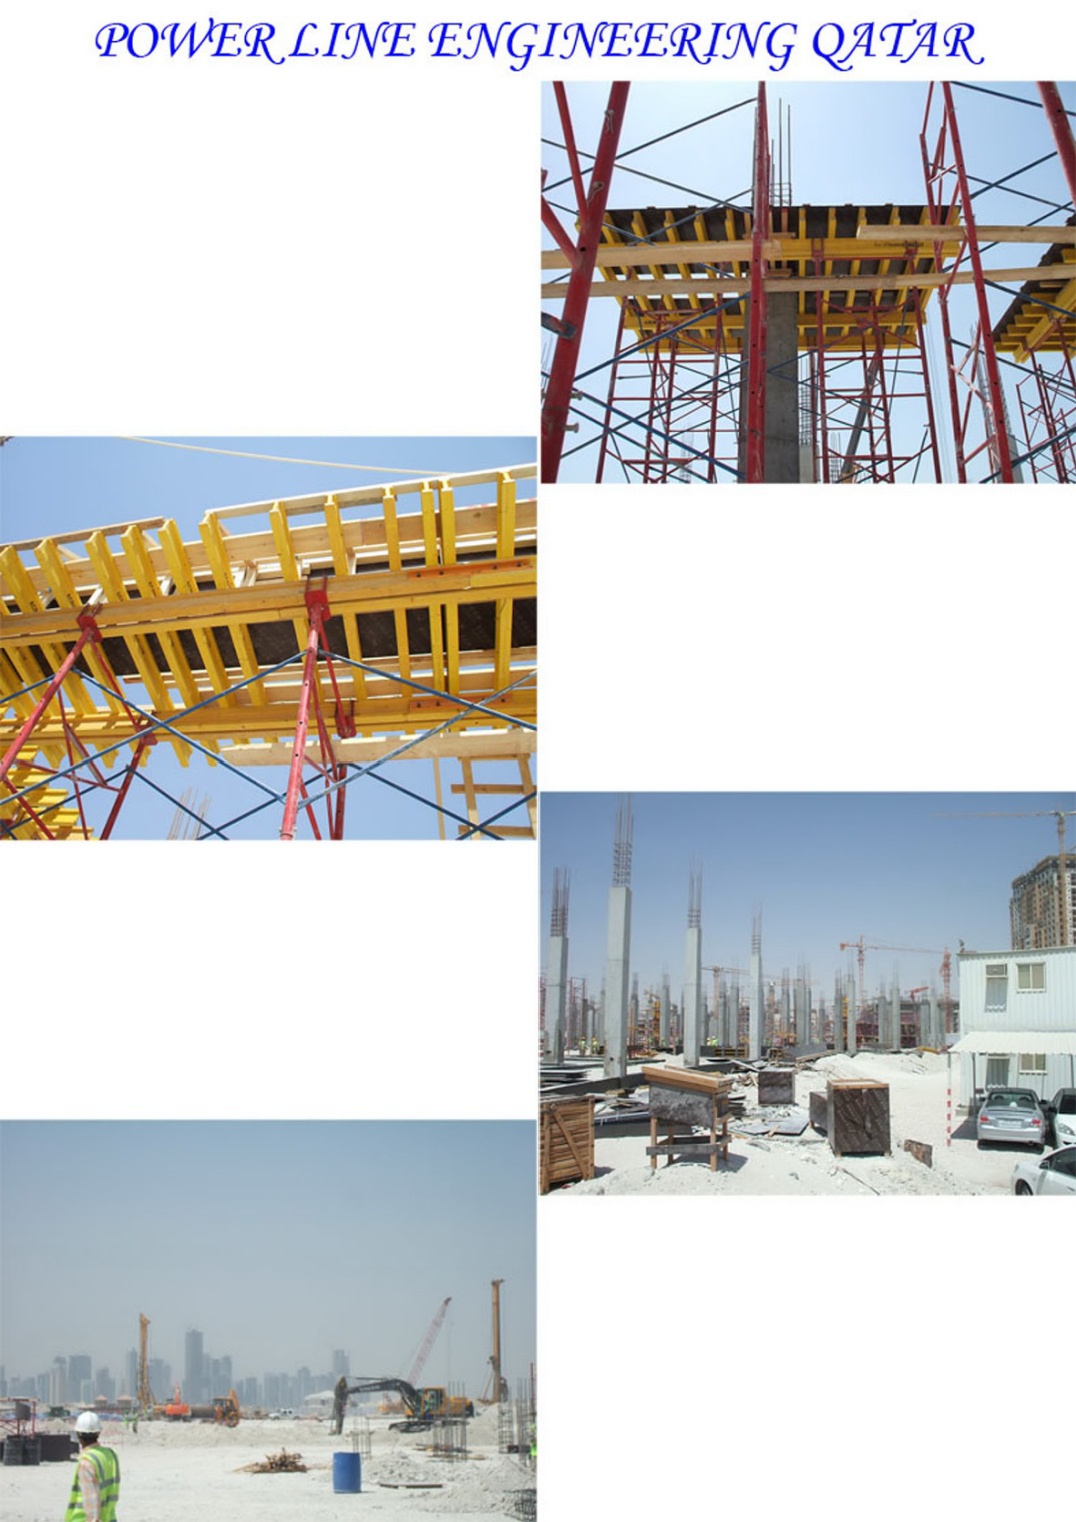 Power line Engineering Qatar